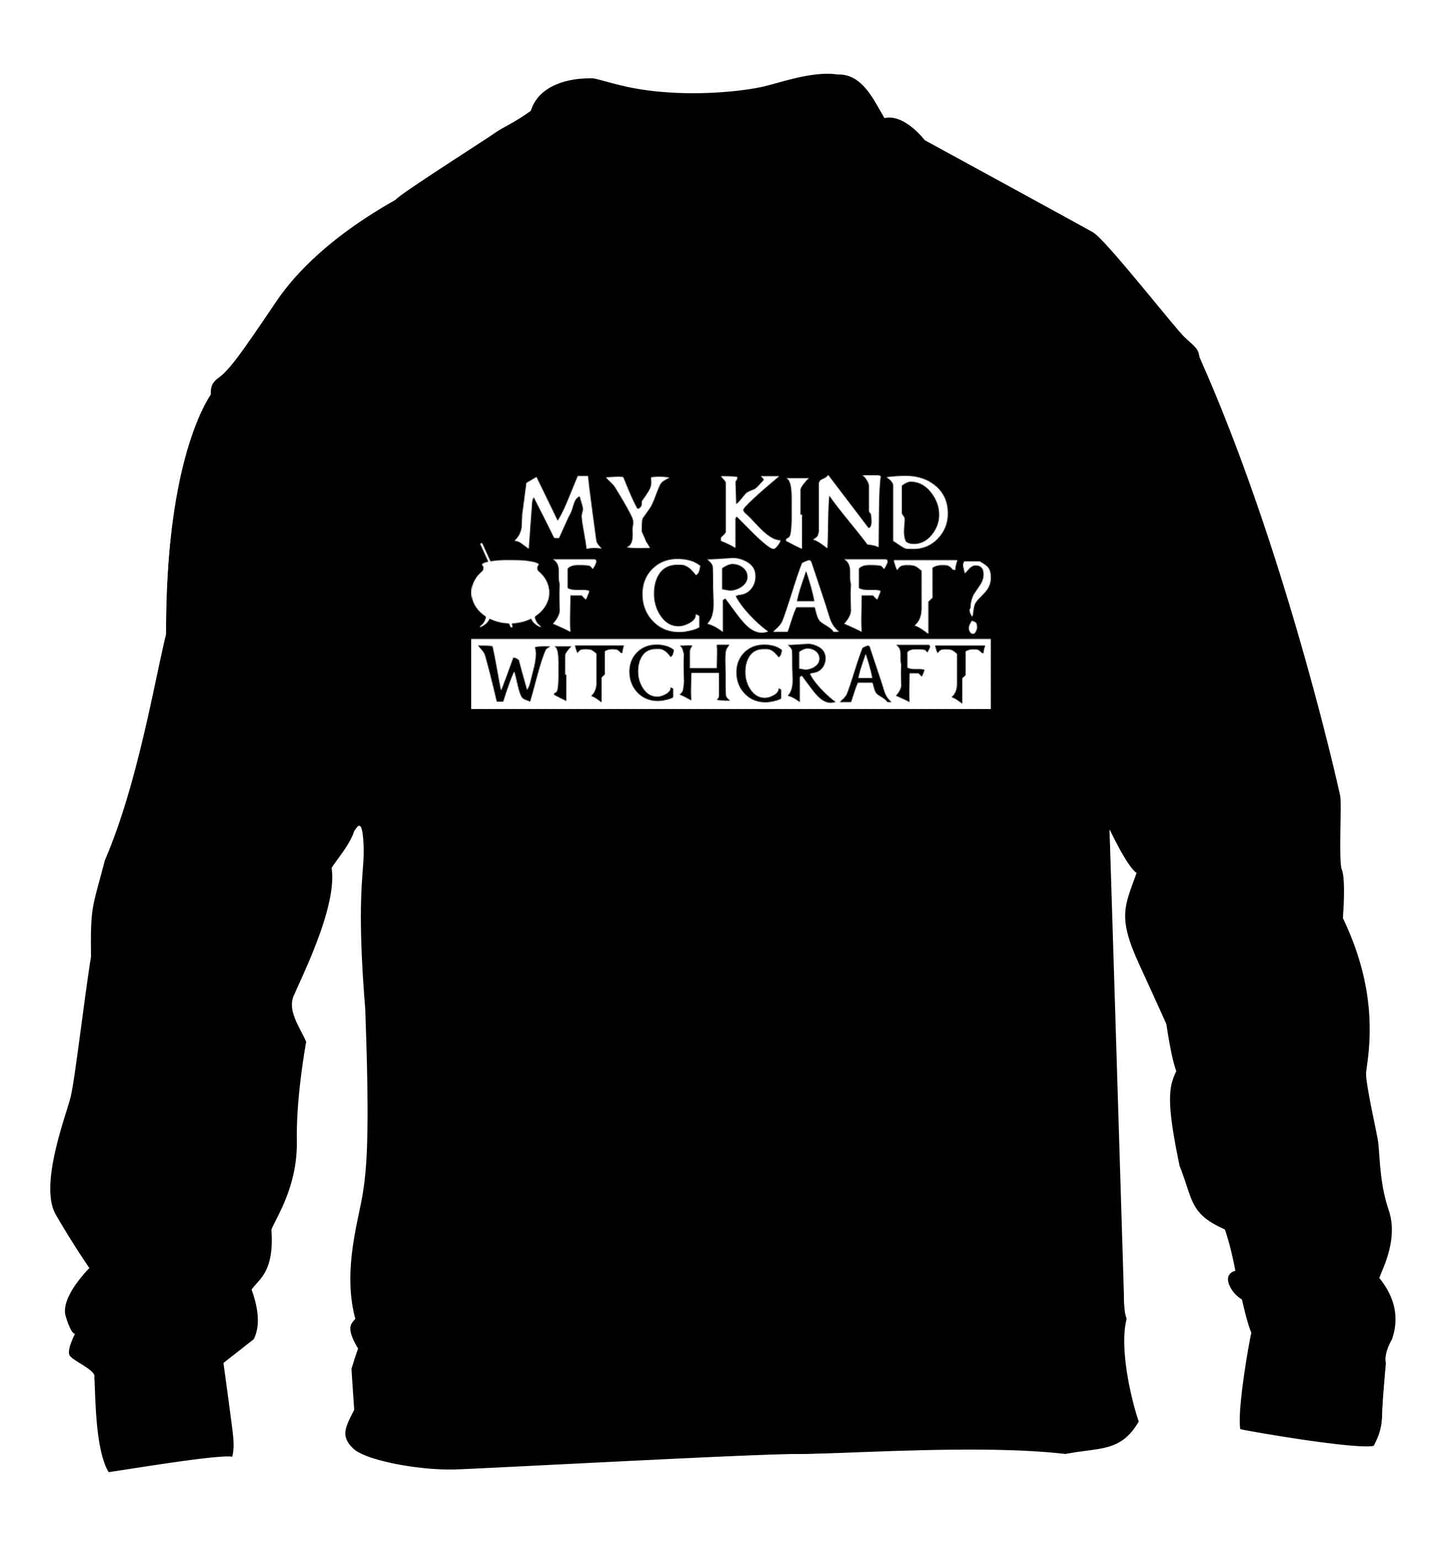 My king of craft? witchcraft  children's black sweater 12-13 Years